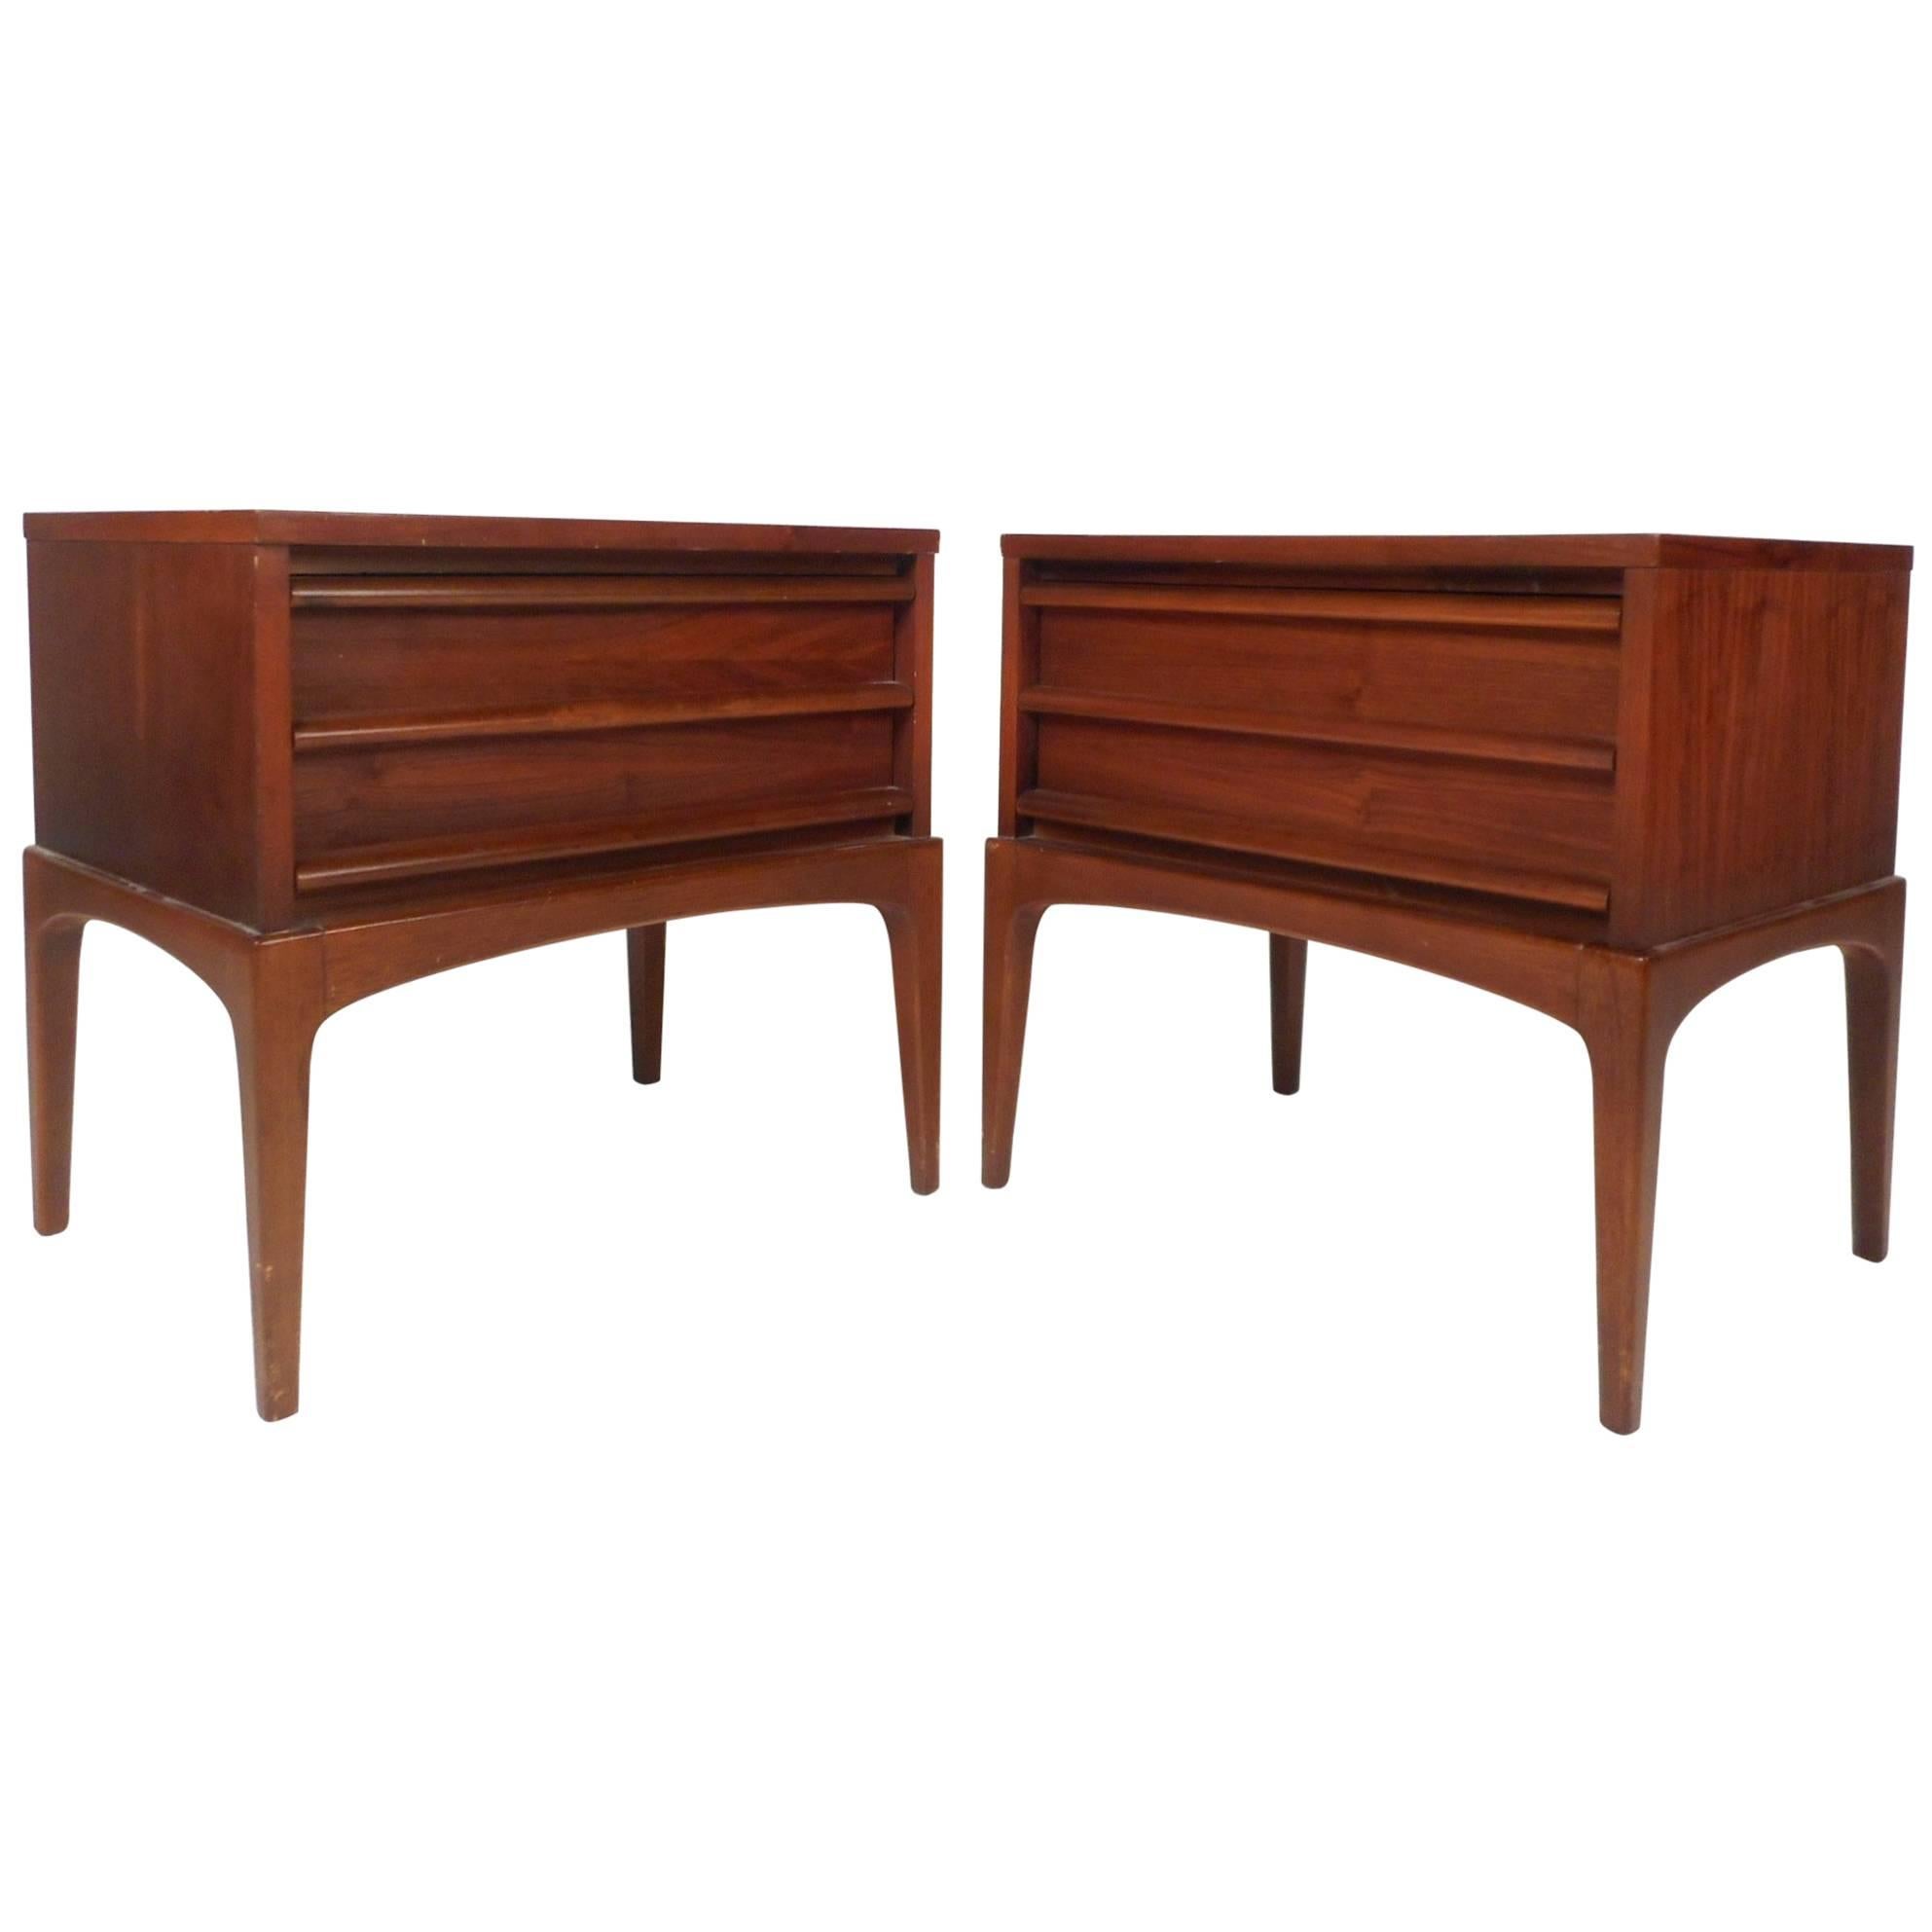 Pair of Mid-Century Modern Walnut Nightstands by Lane Furniture